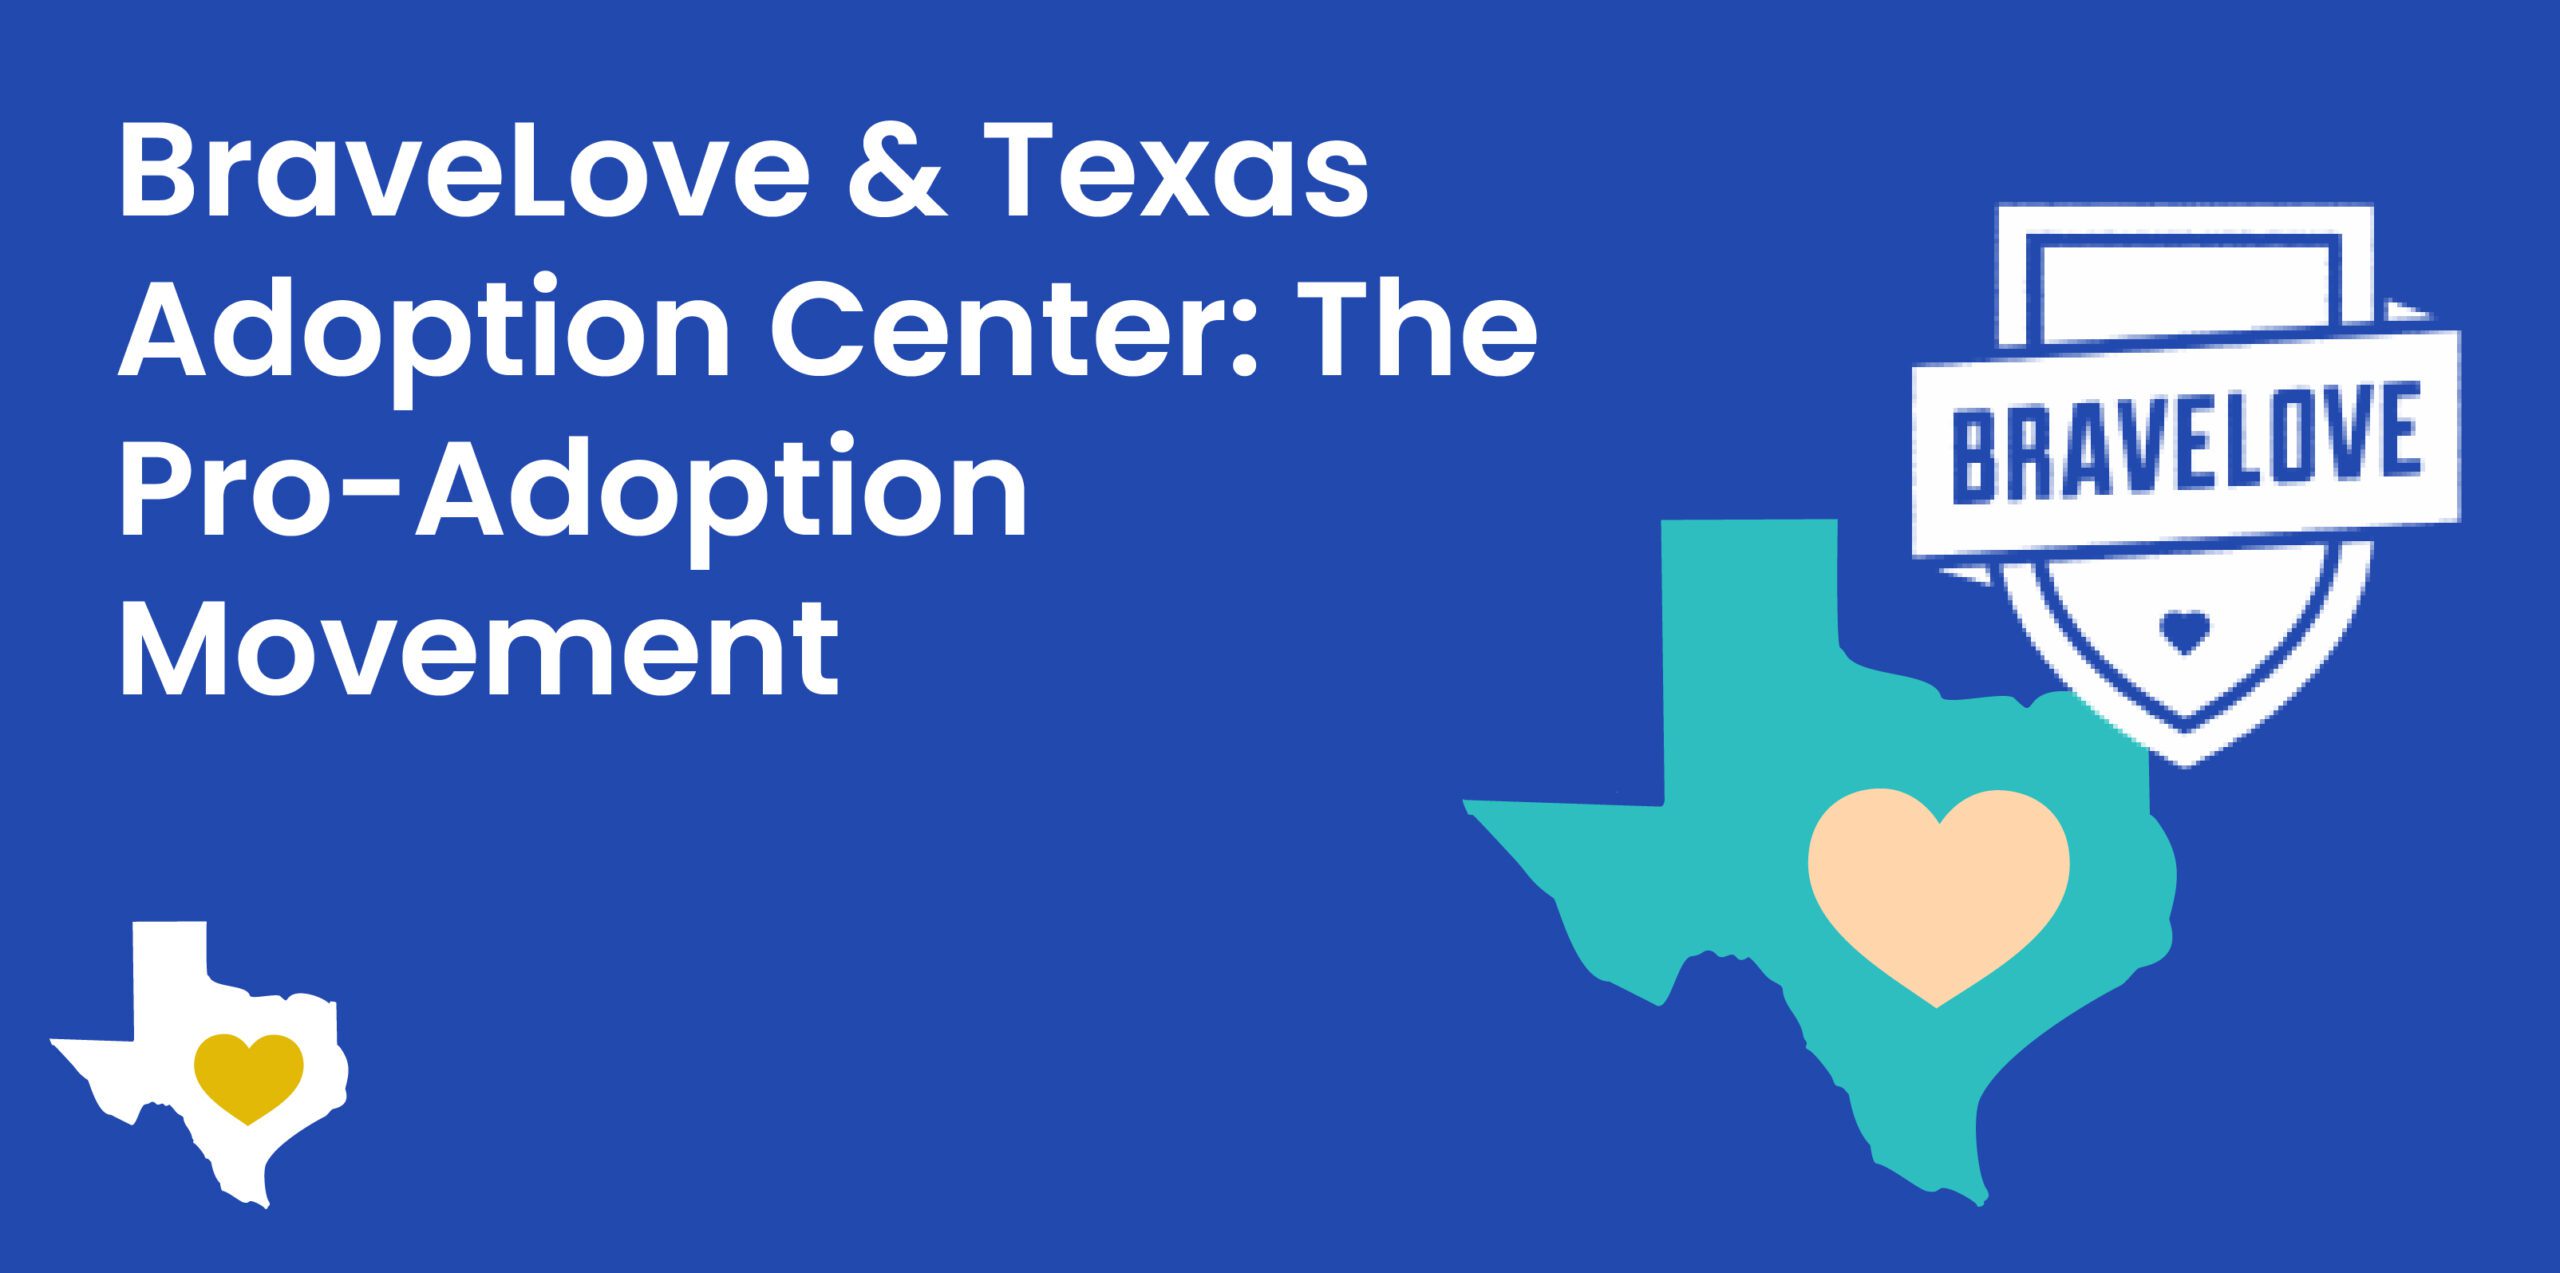 BraveLove & Texas Adoption Center: The Pro-Adoption Movement